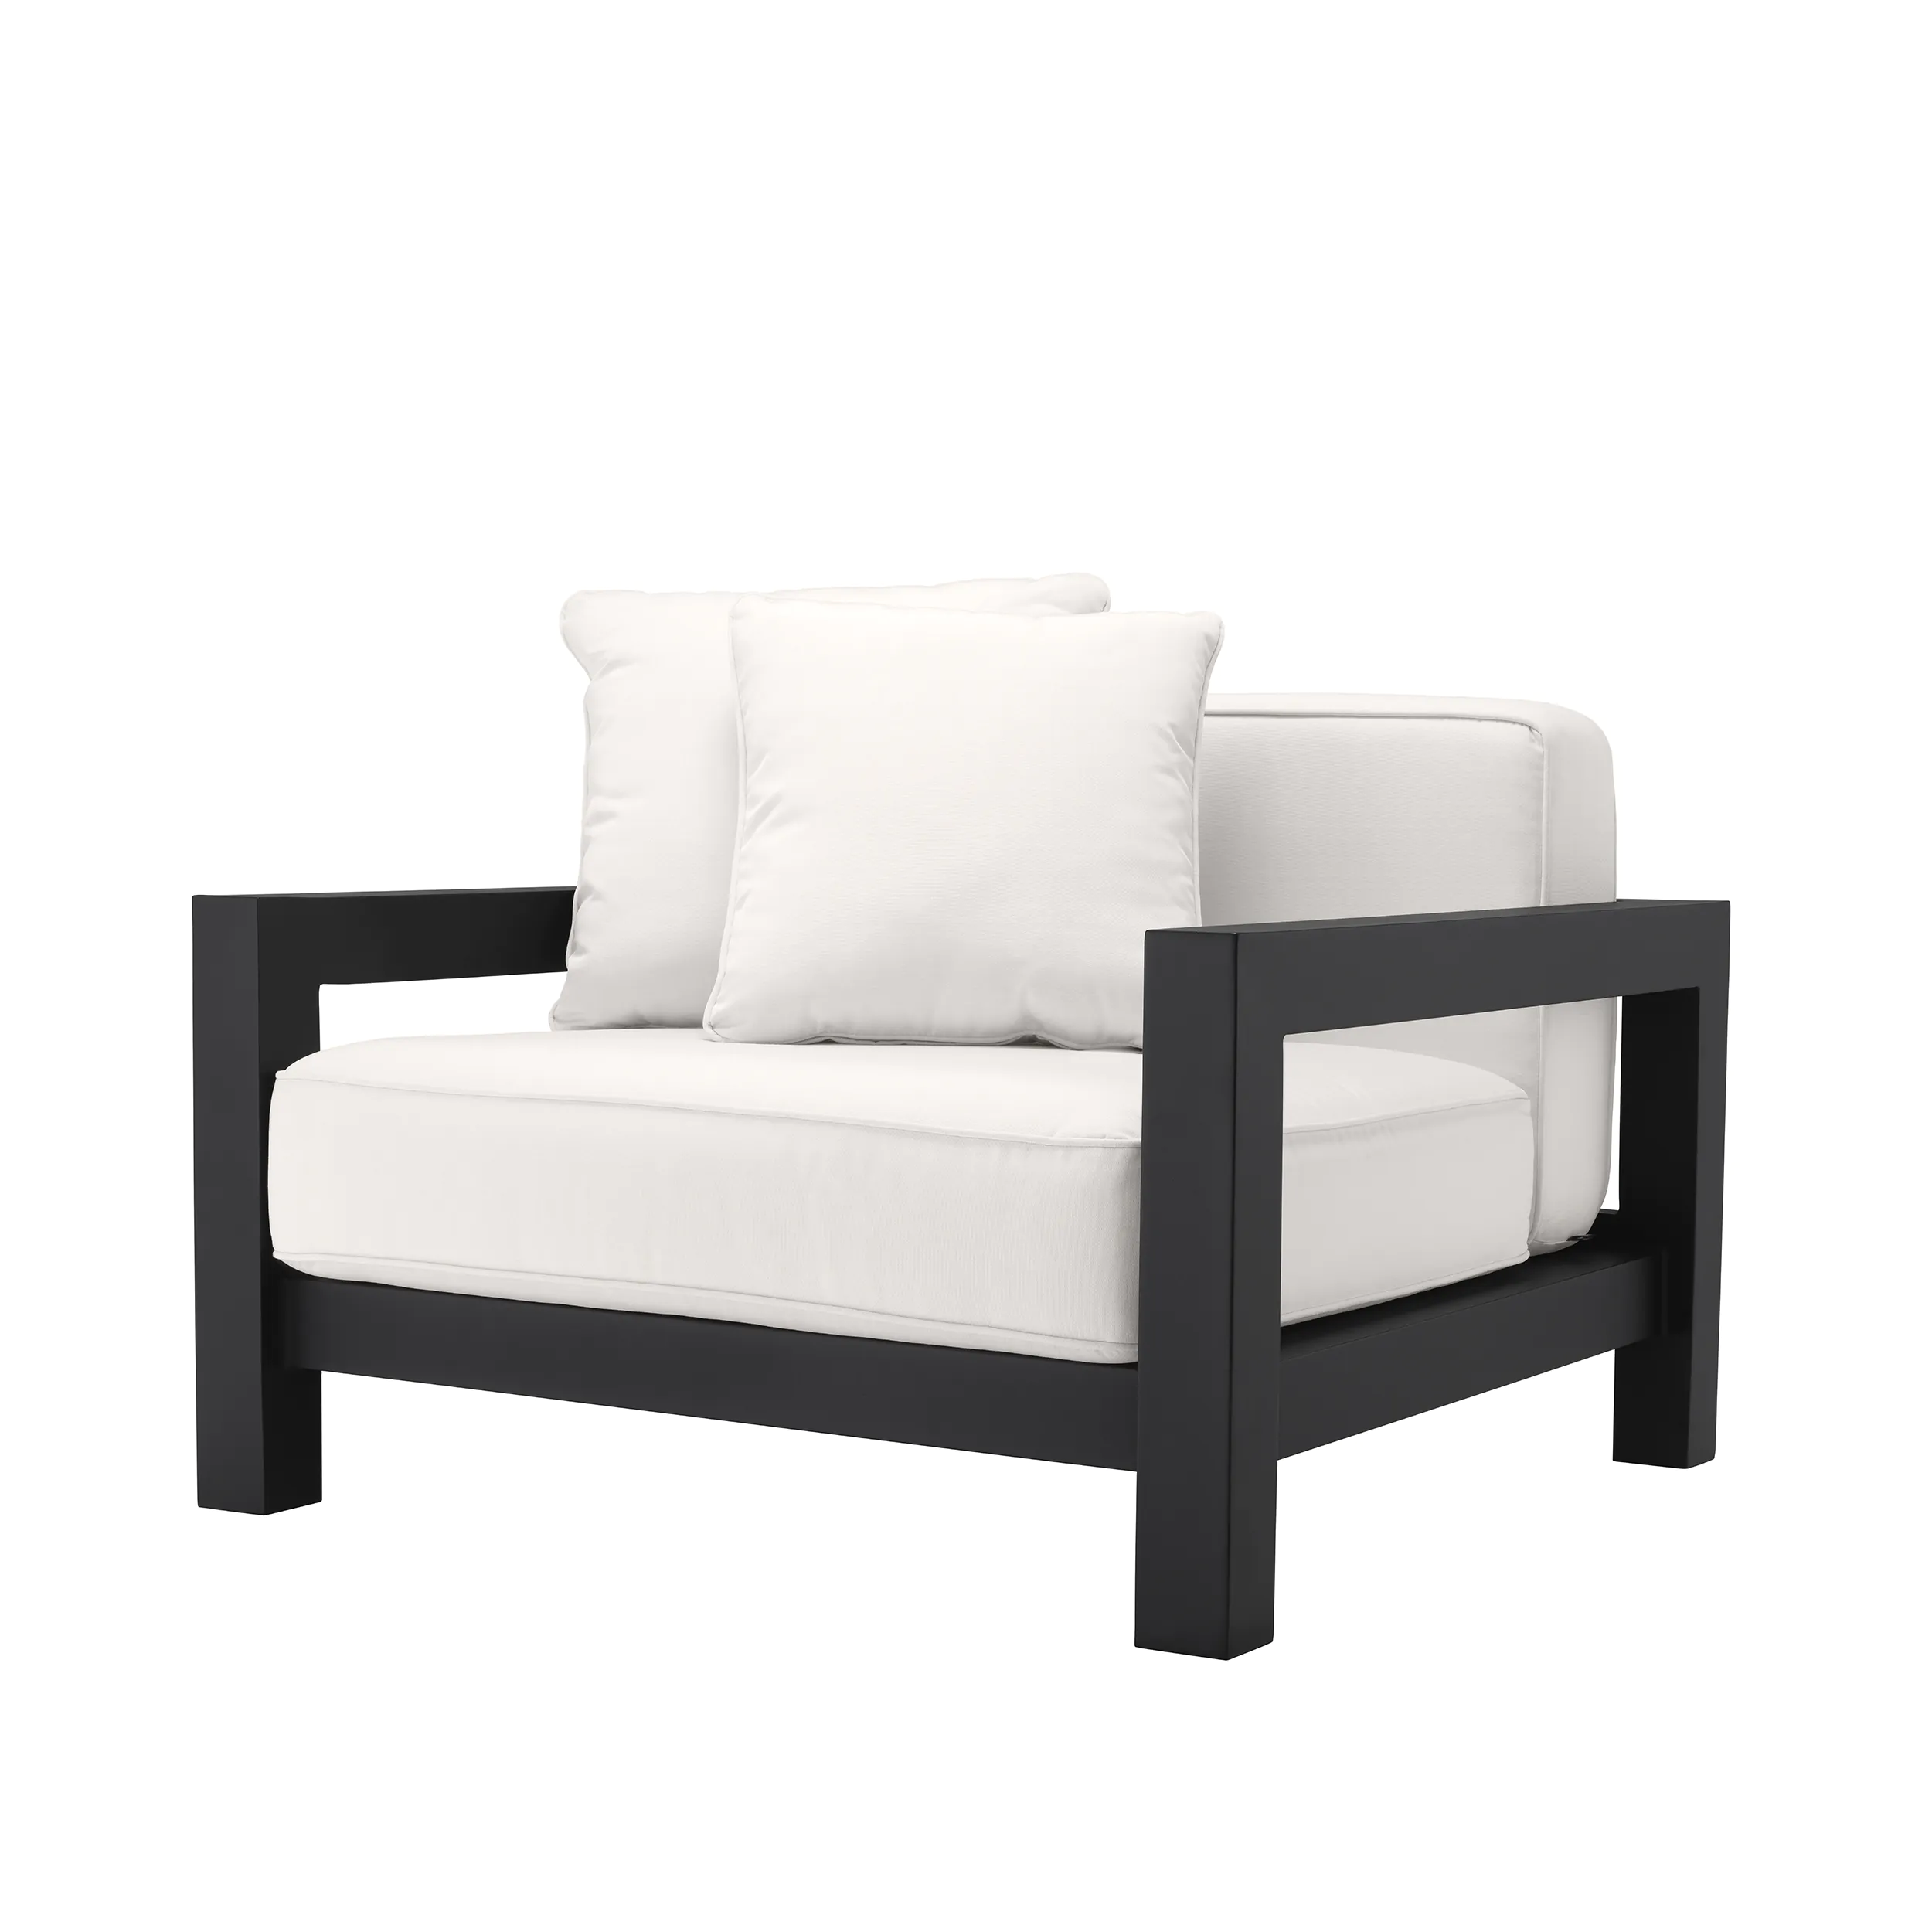 Cap-Antibes Outdoor Chair Black Eichholtz-115005-61id